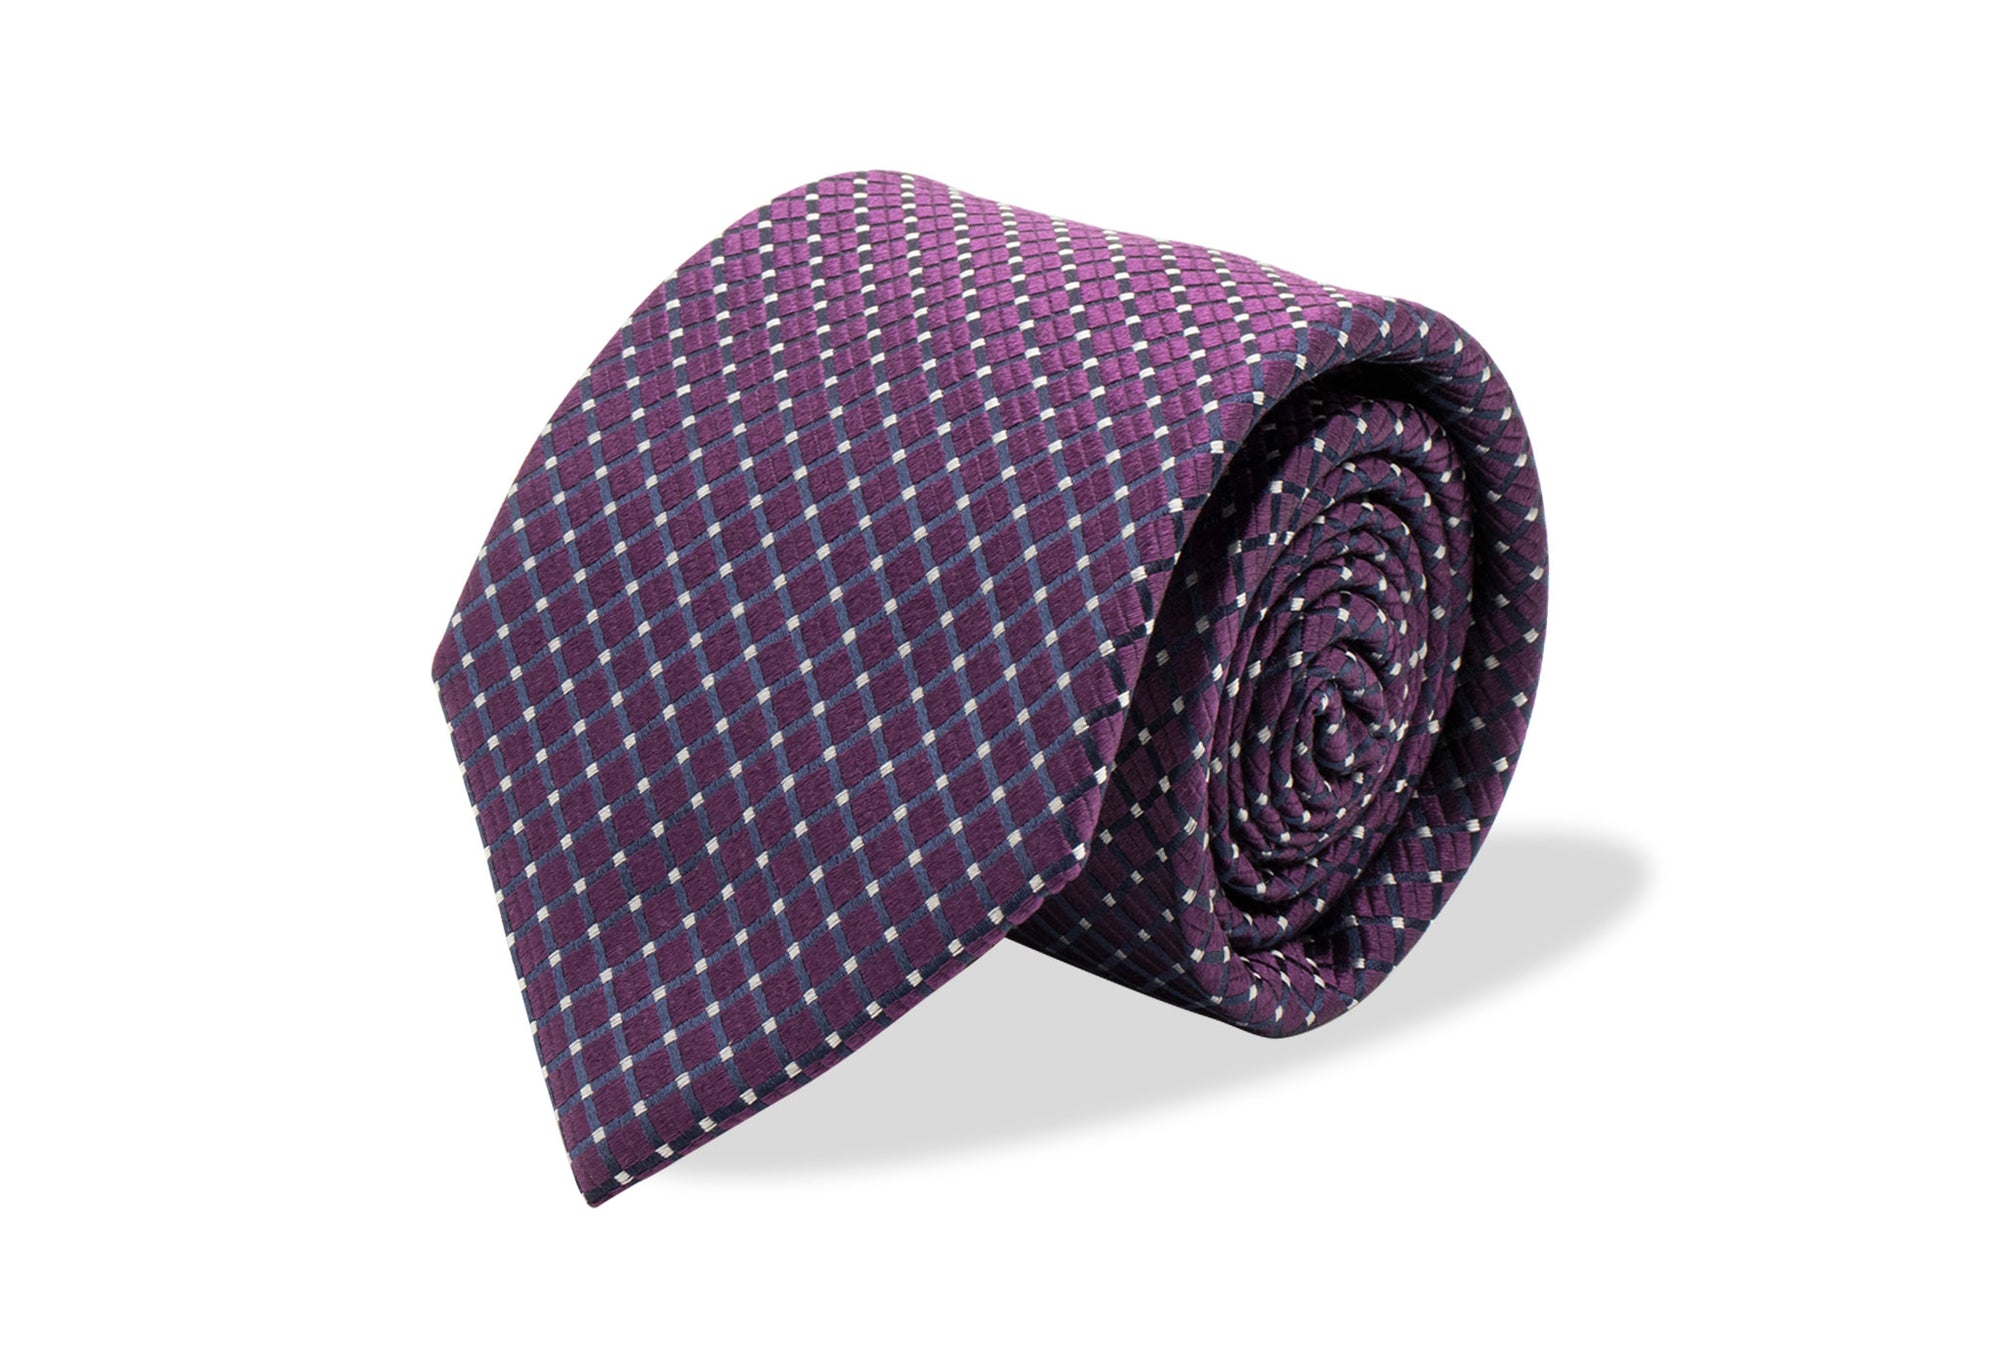 Maranhao Silk Tie